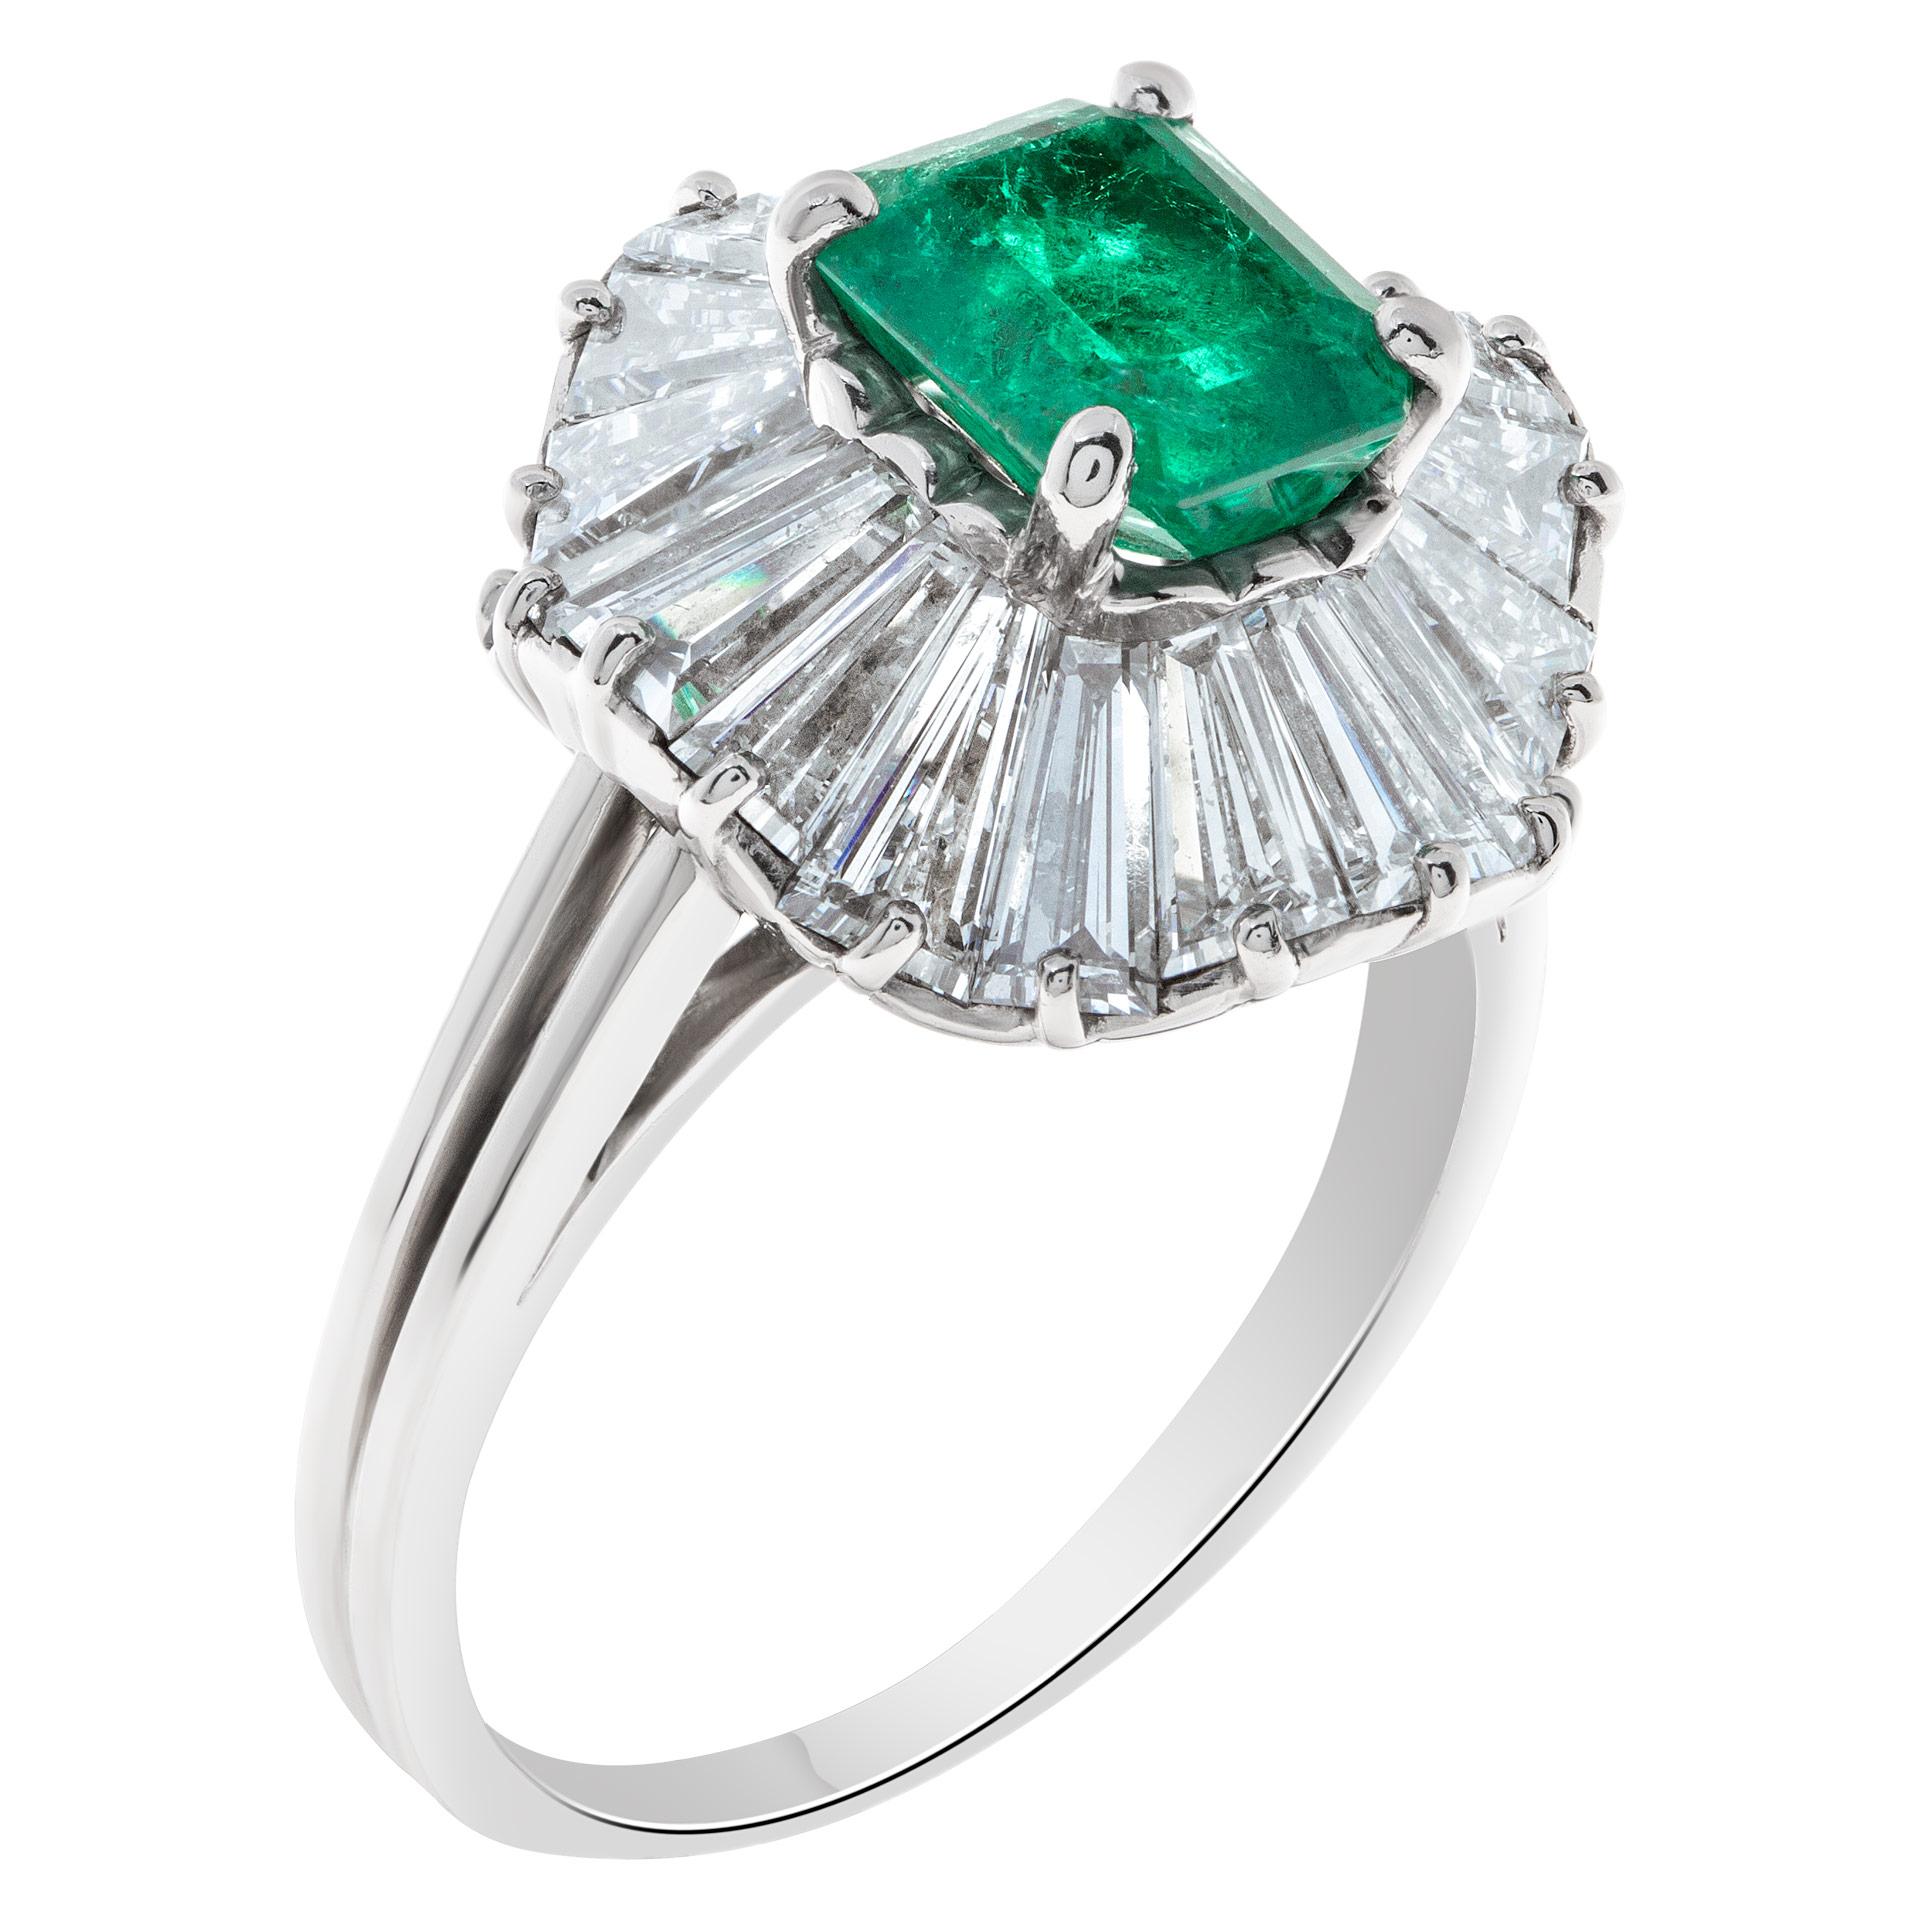 emerald cut emerald ring surfside